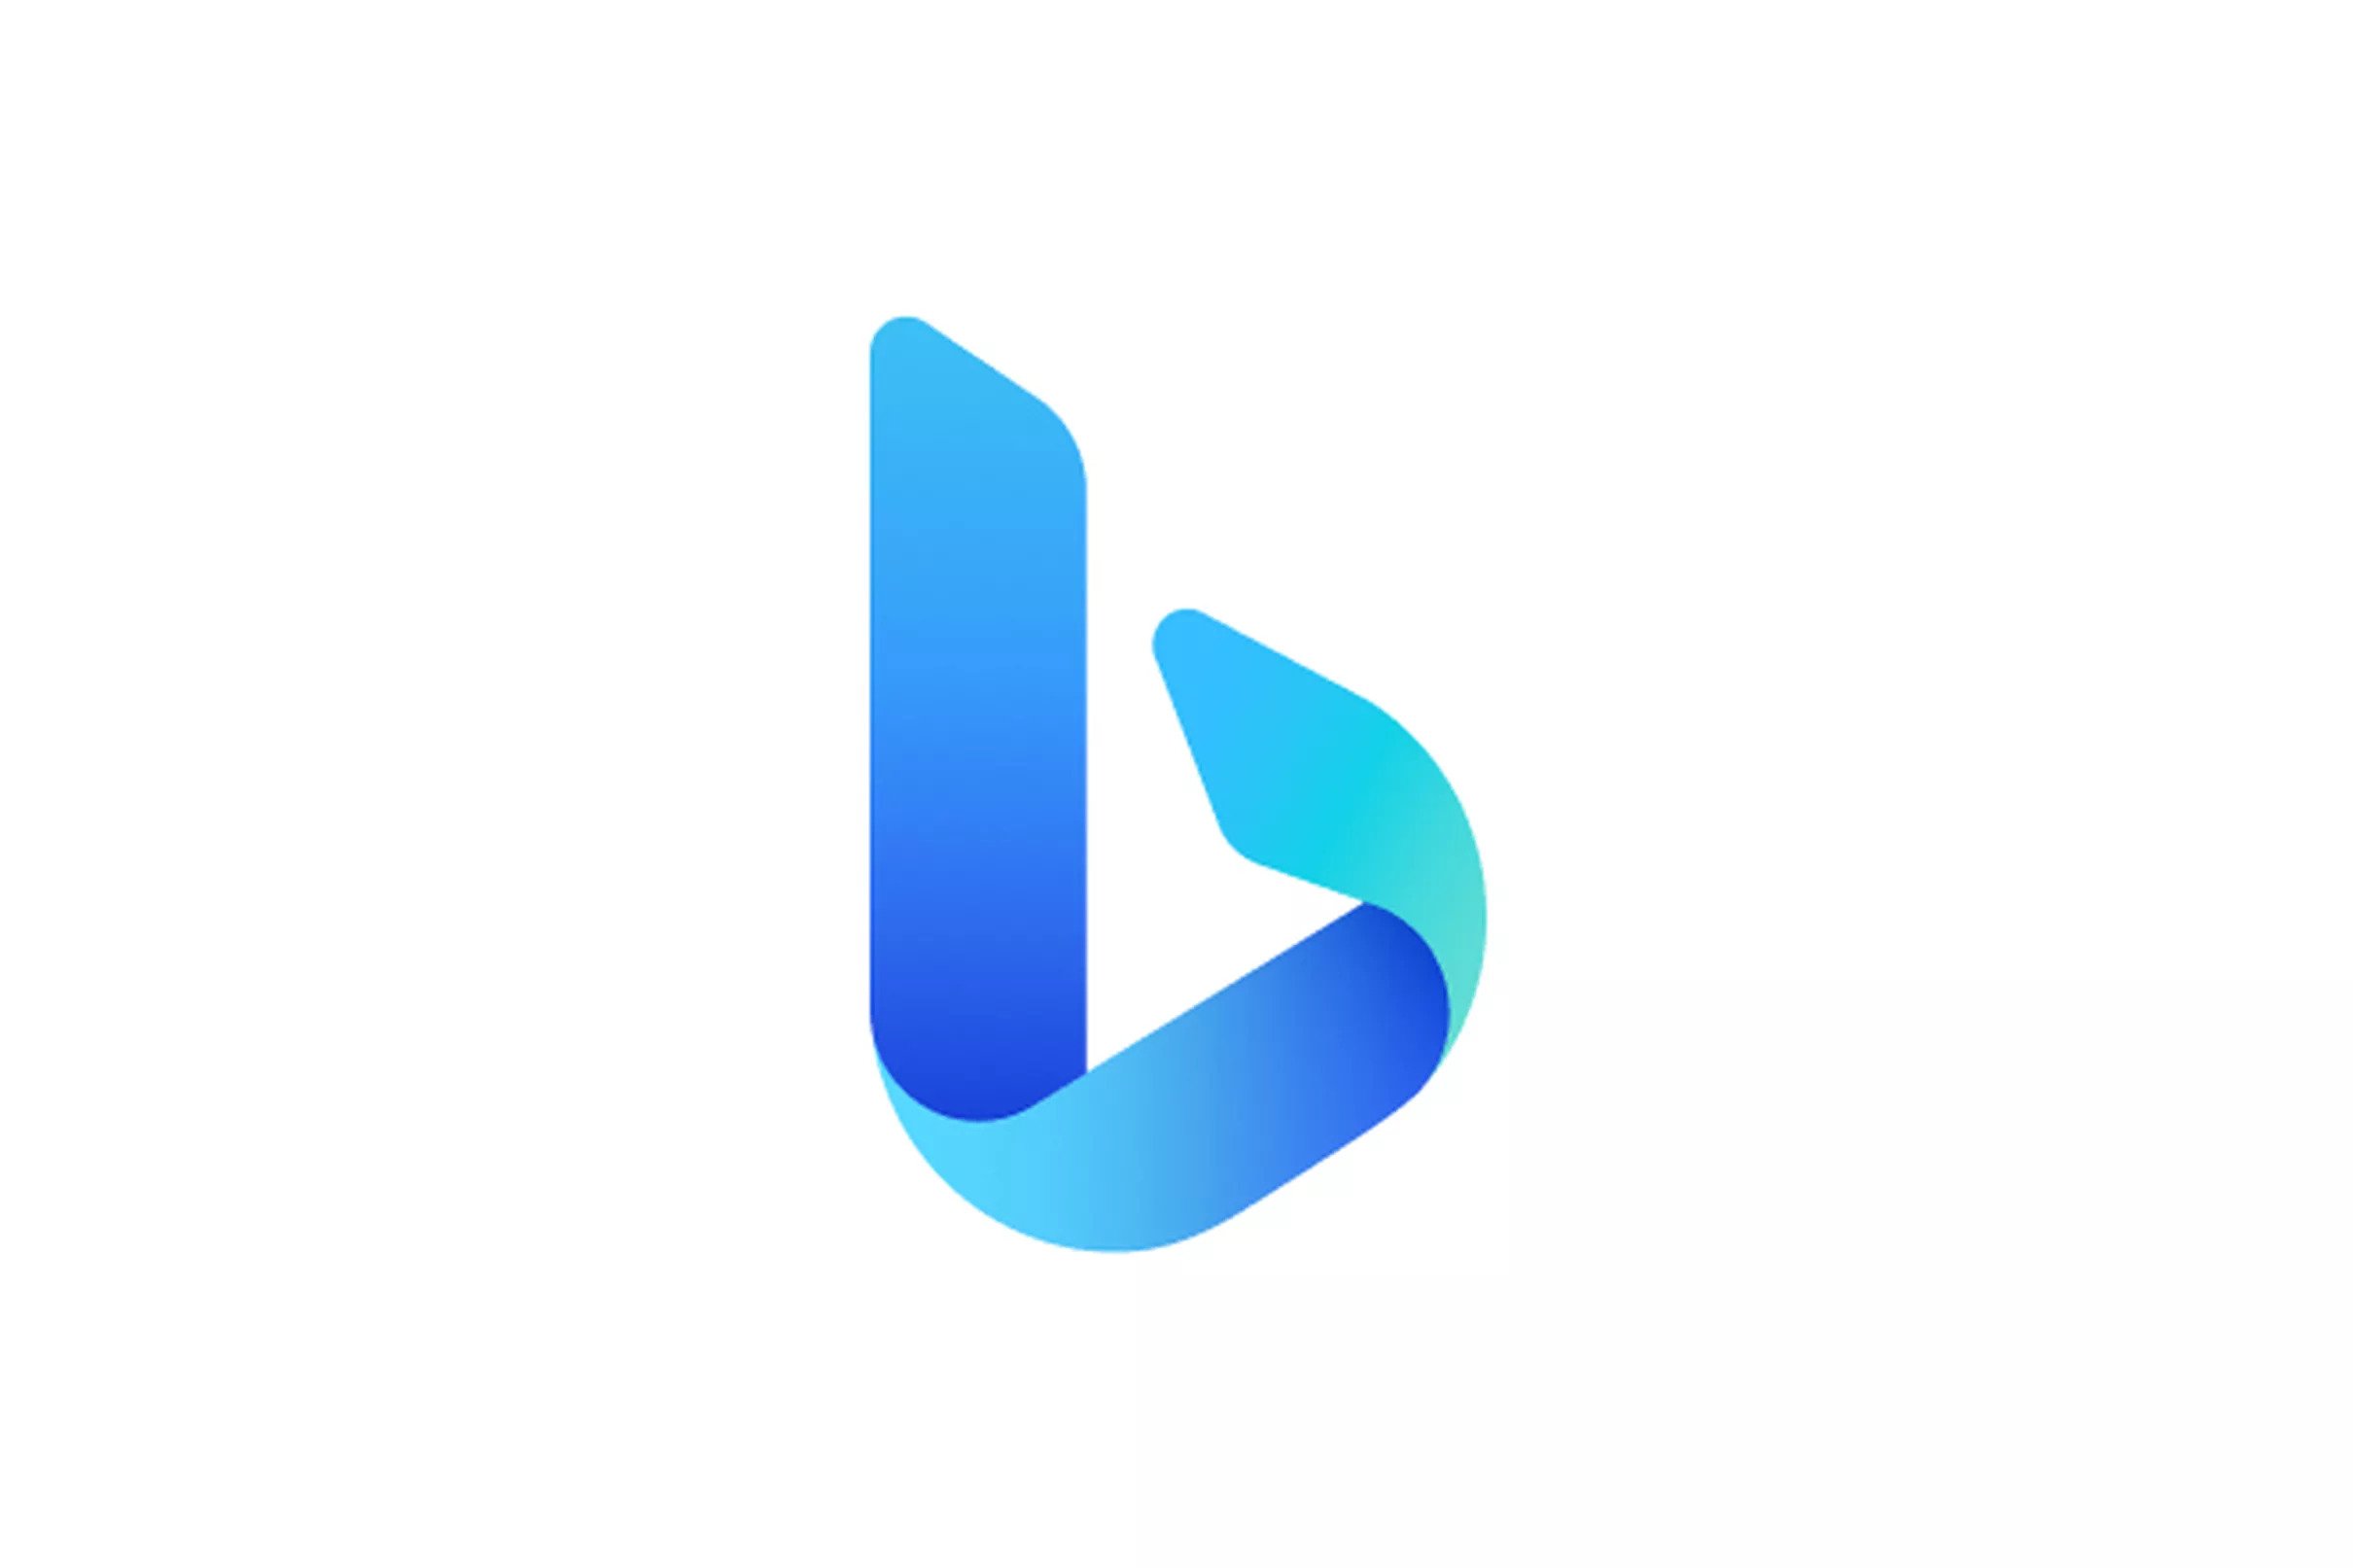 Logotipo do Microsoft Bing 2020